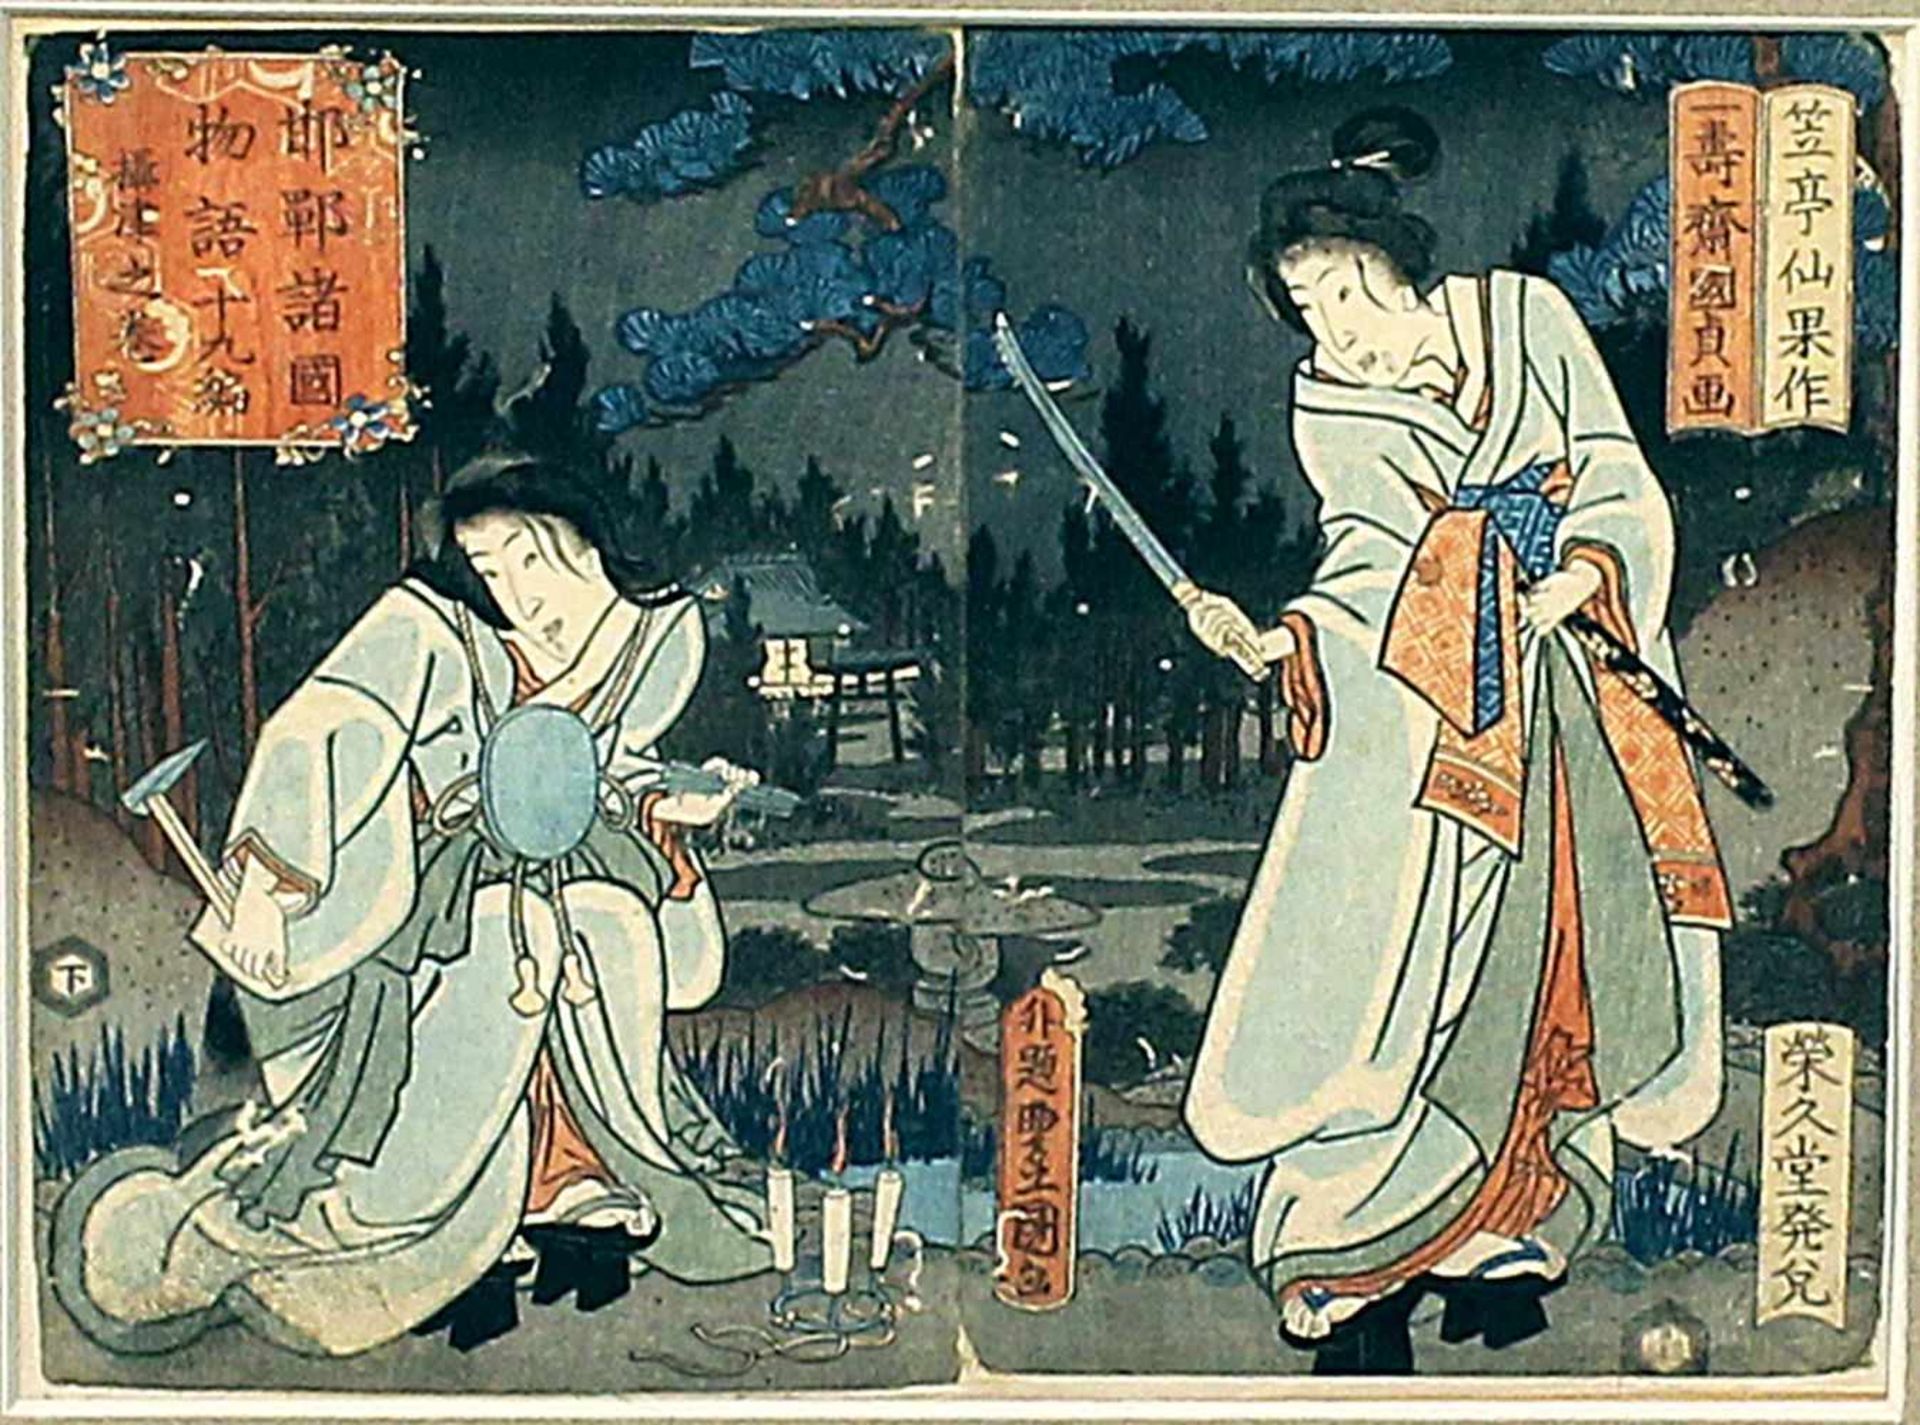 Kunisada, Ichijusai (19. Jh.), wohl"Illustration aus dem Buch: Wandlung, 19. Novelle Teisenshokoku